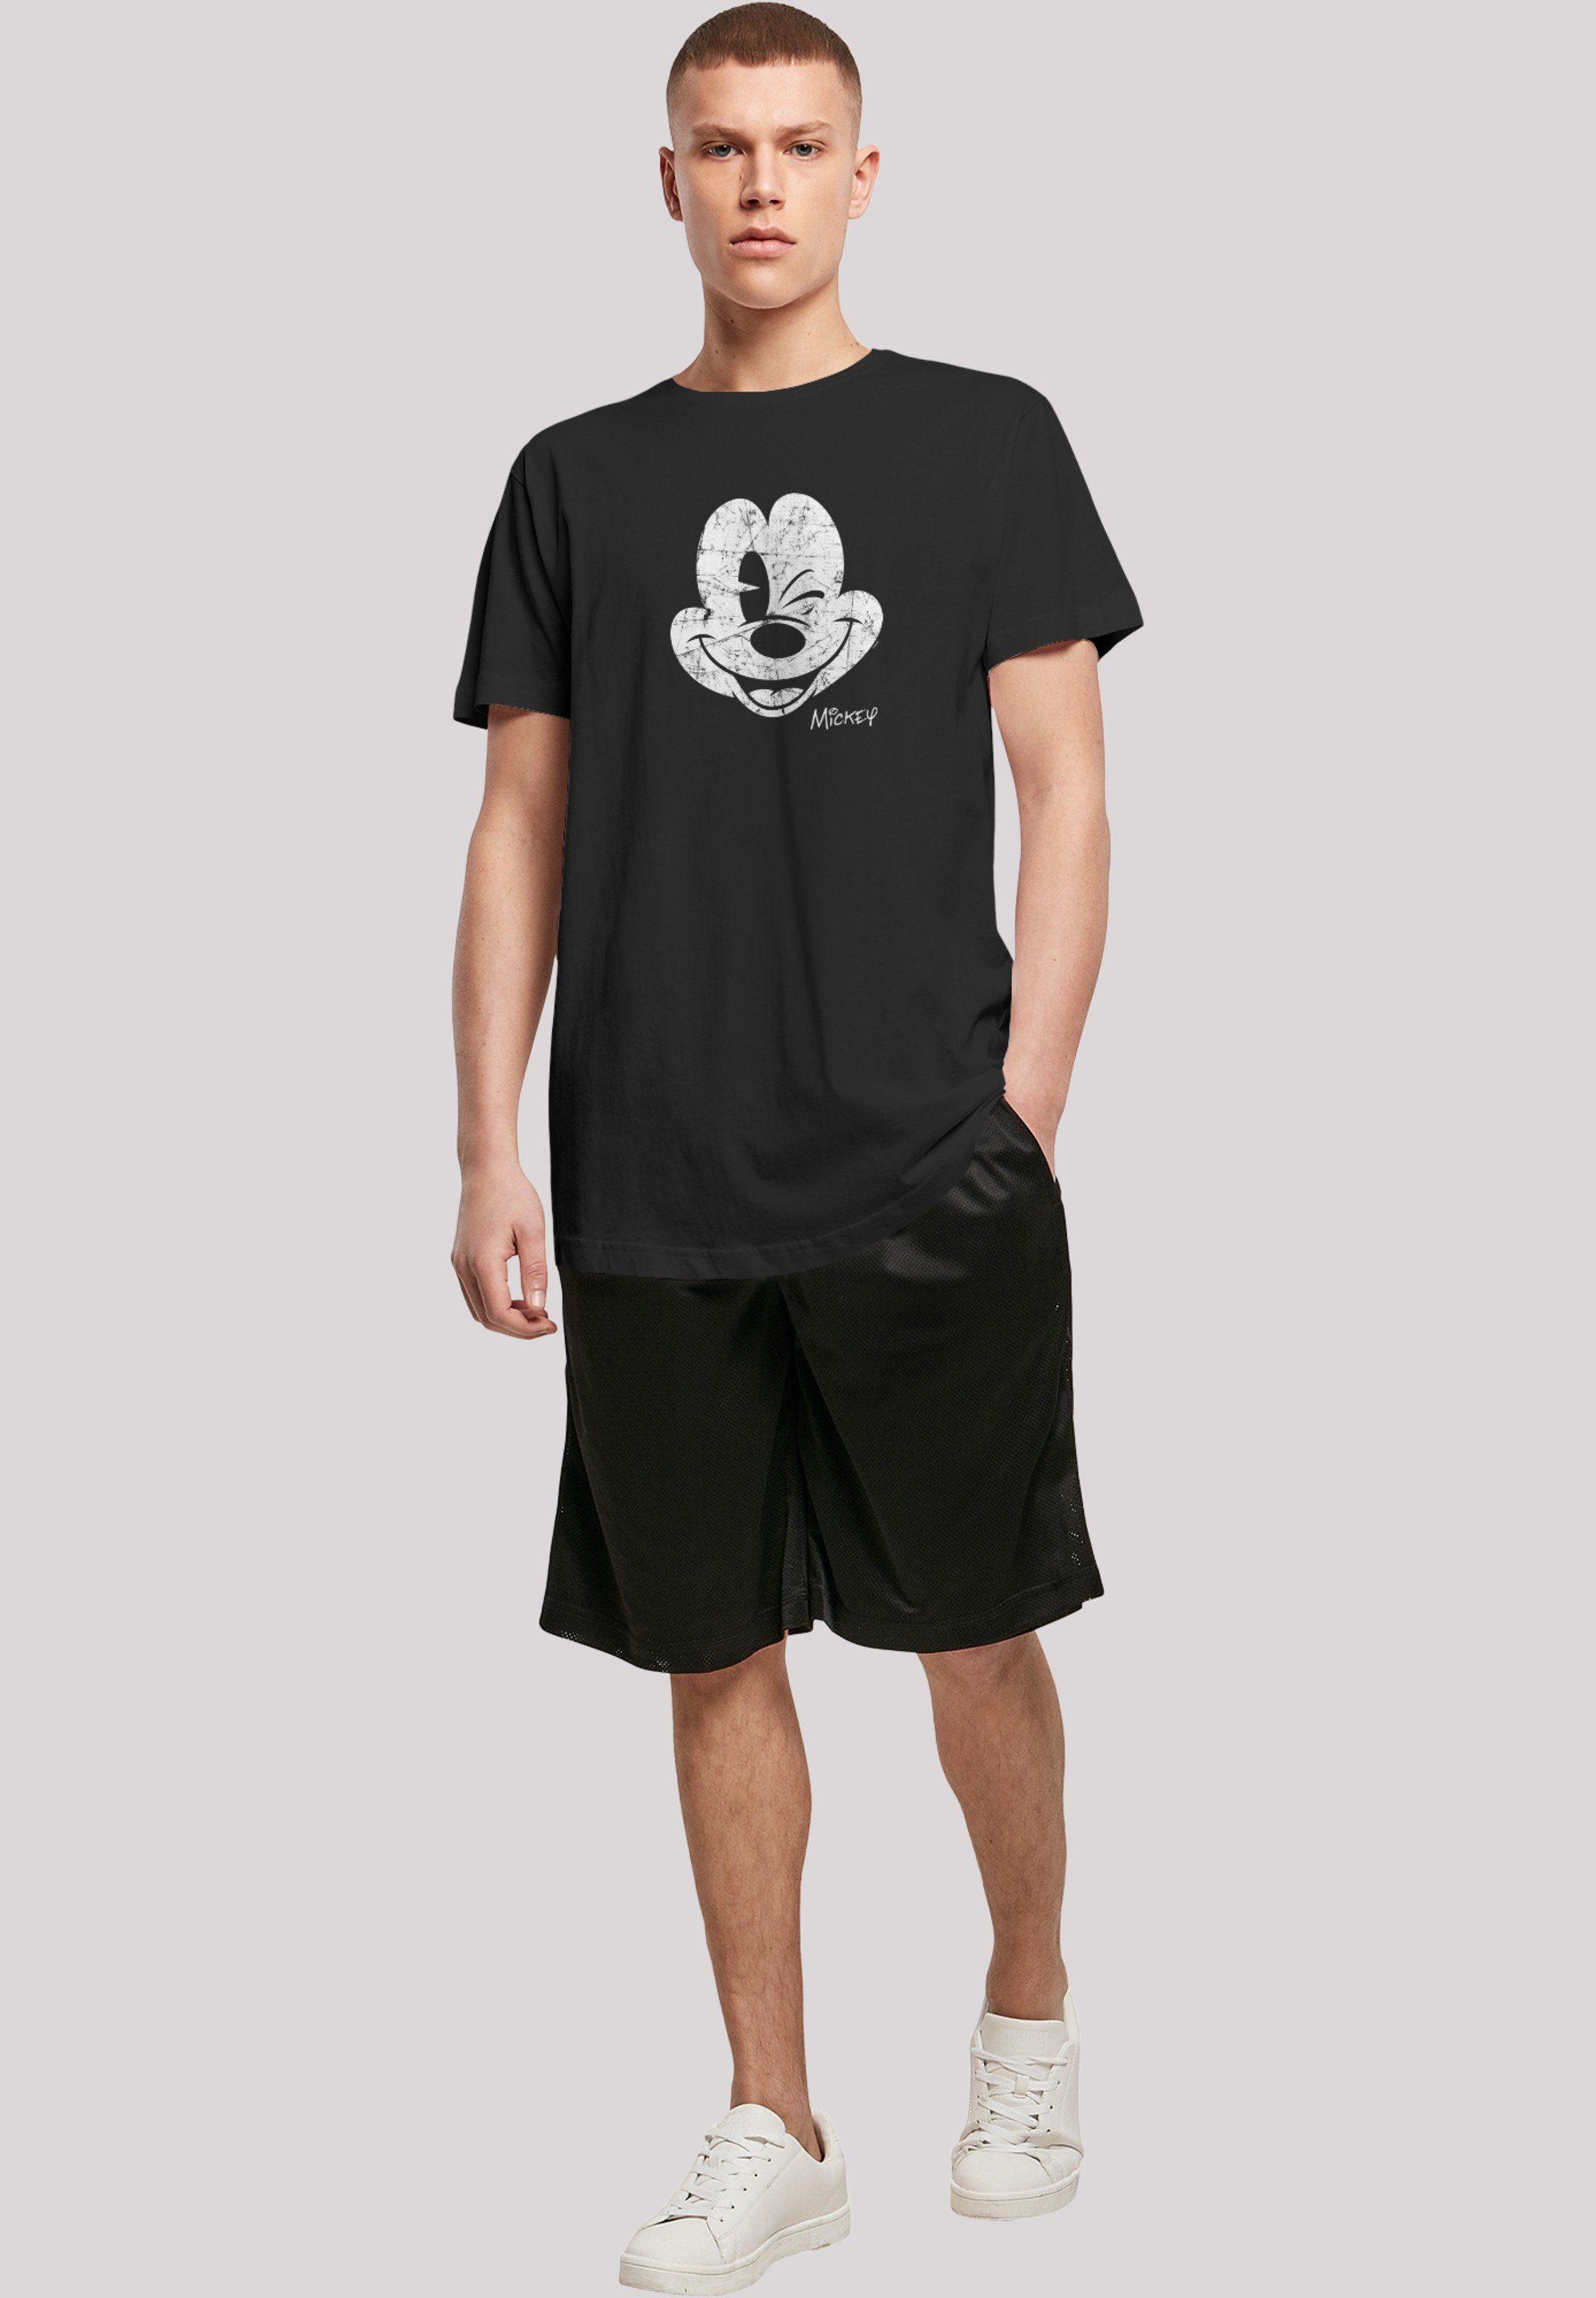 F4NT4STIC T-Shirt Mouse ' Beaten Print Since Mickey